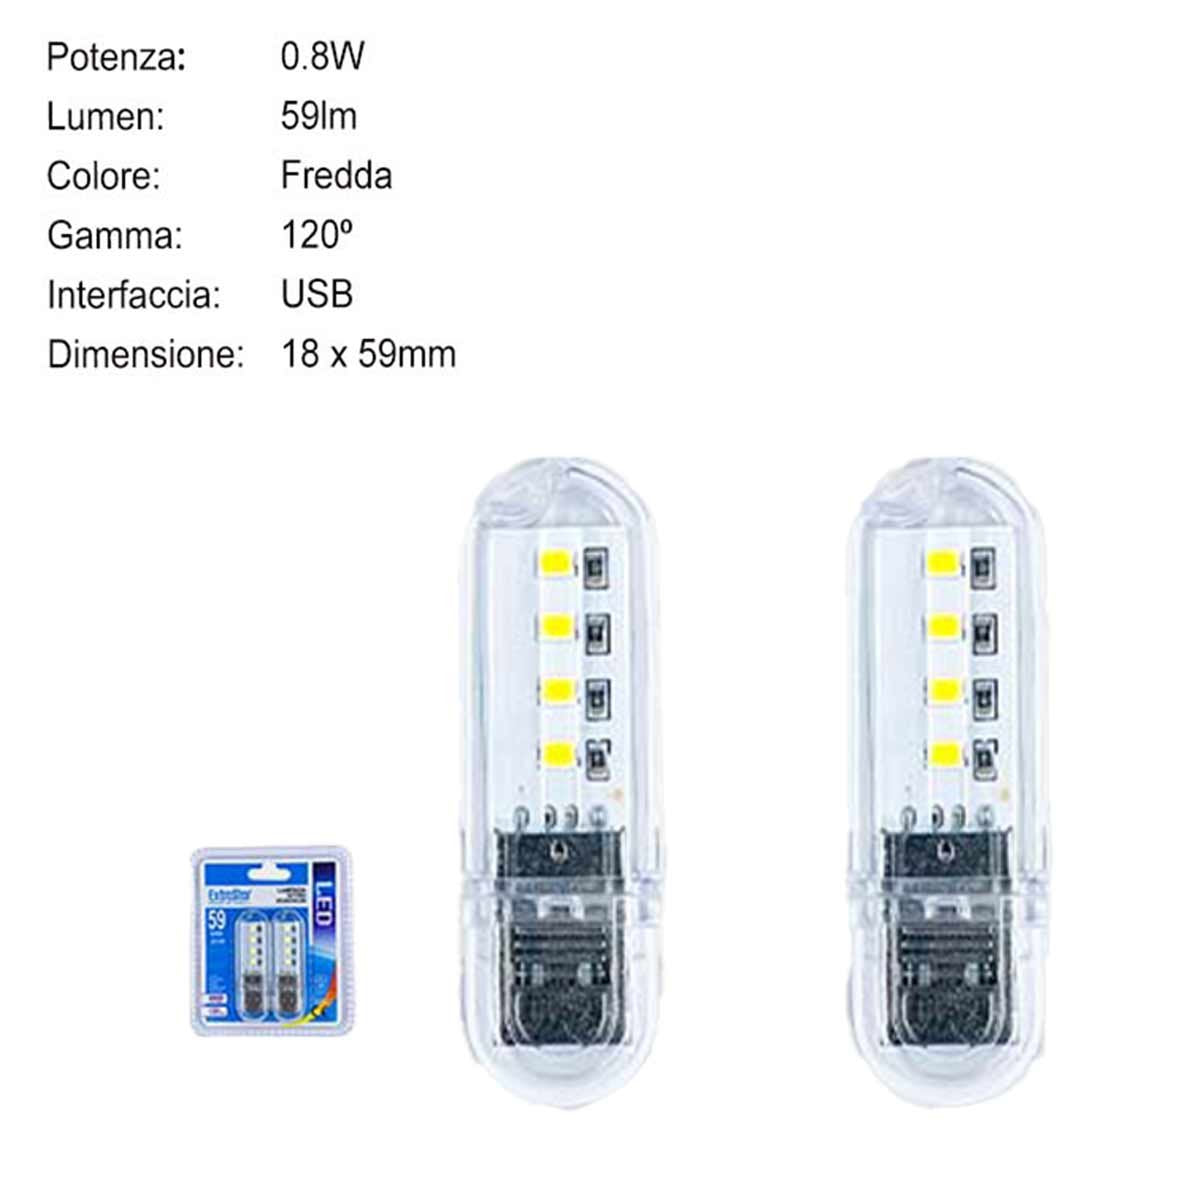 2 pcs Lampada Notturna Decorativa USB a LED Portatile 0.8W 59LM Luce Fredda 6500K